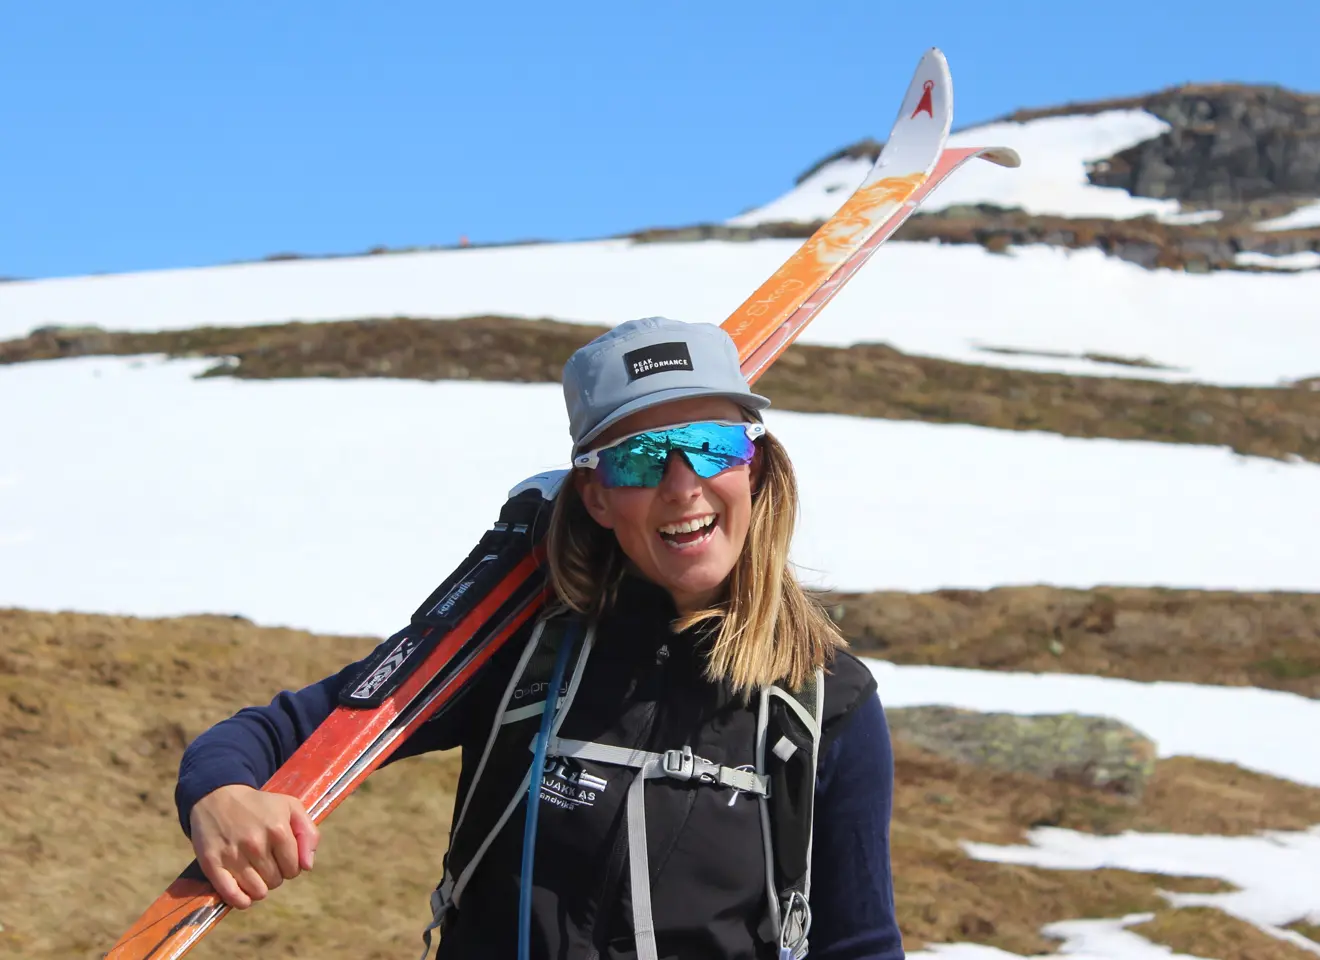 Anne Cathrine Strande Straubes med ski over skulderen, solbrille og stort smil